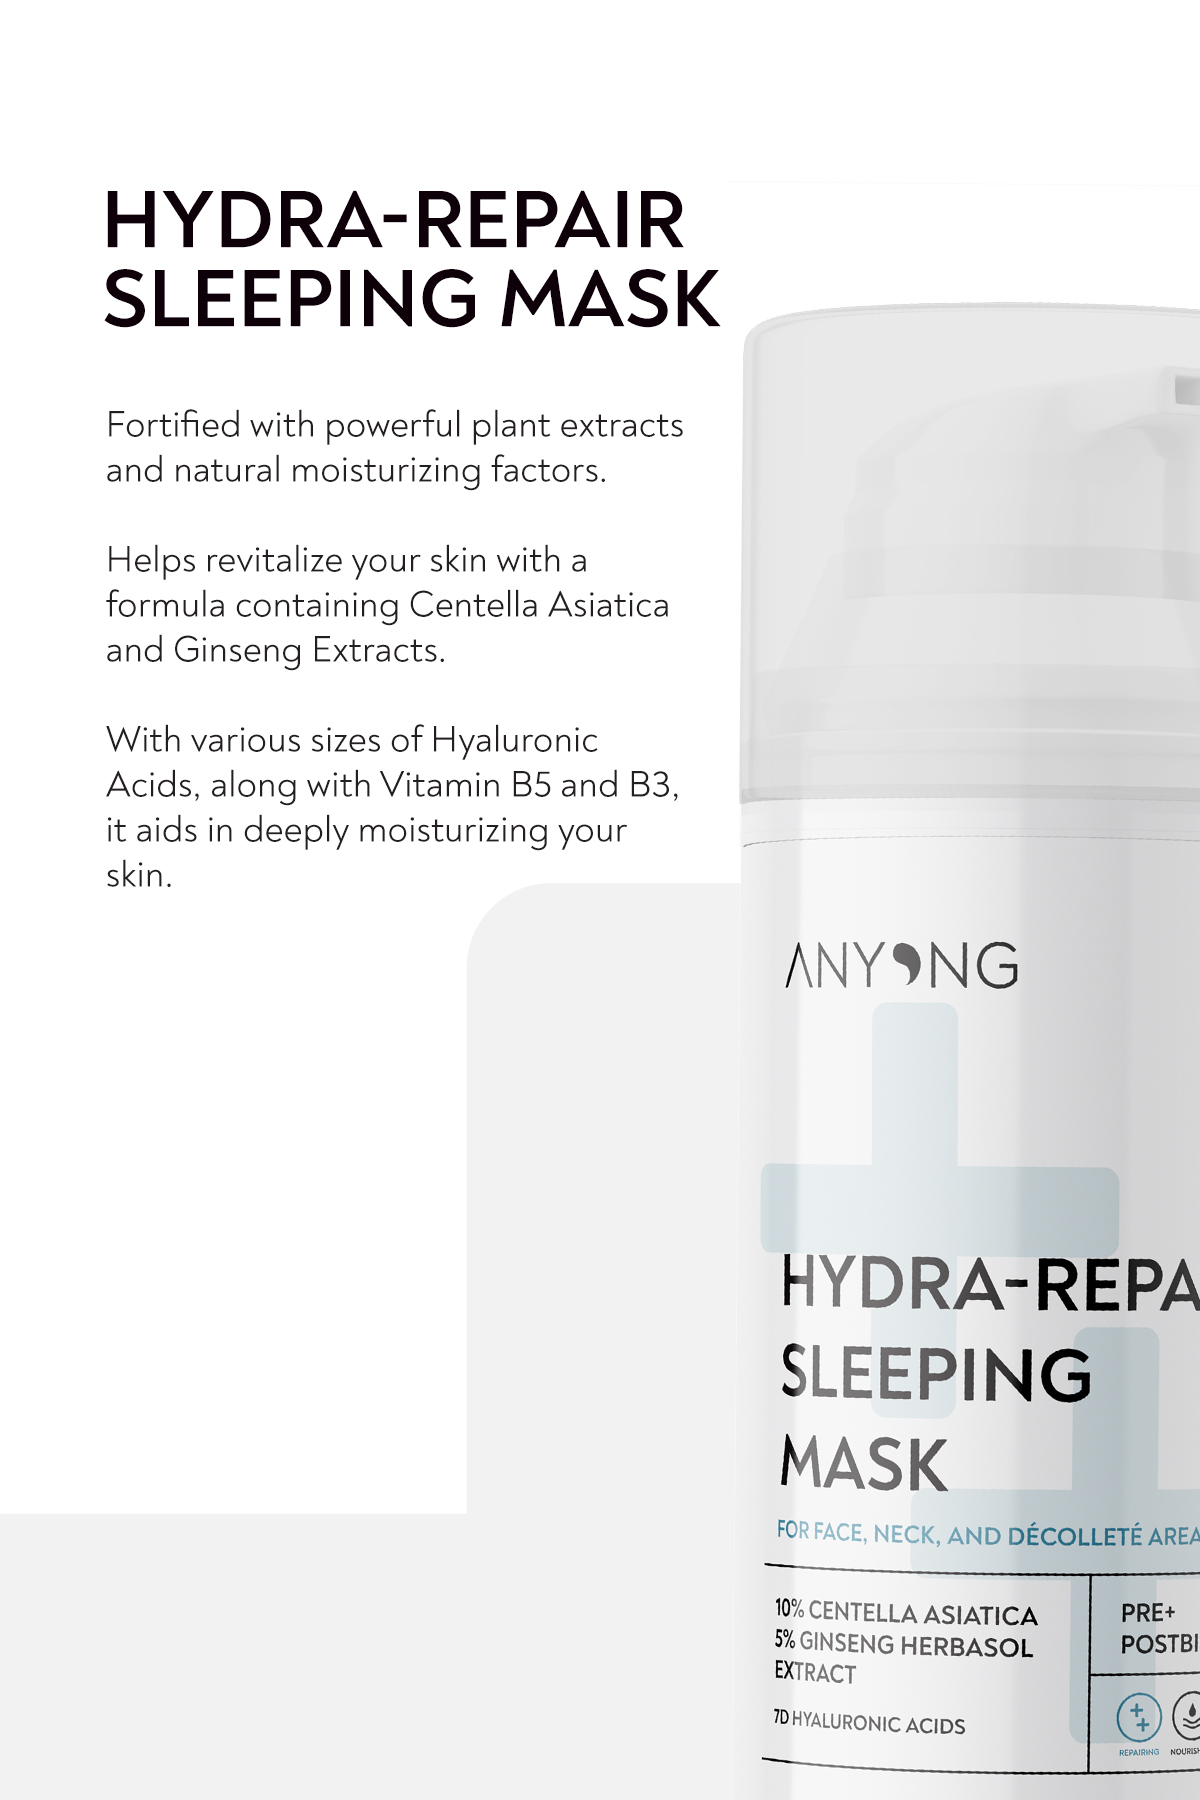 Hydra-Repair Sleeping Mask